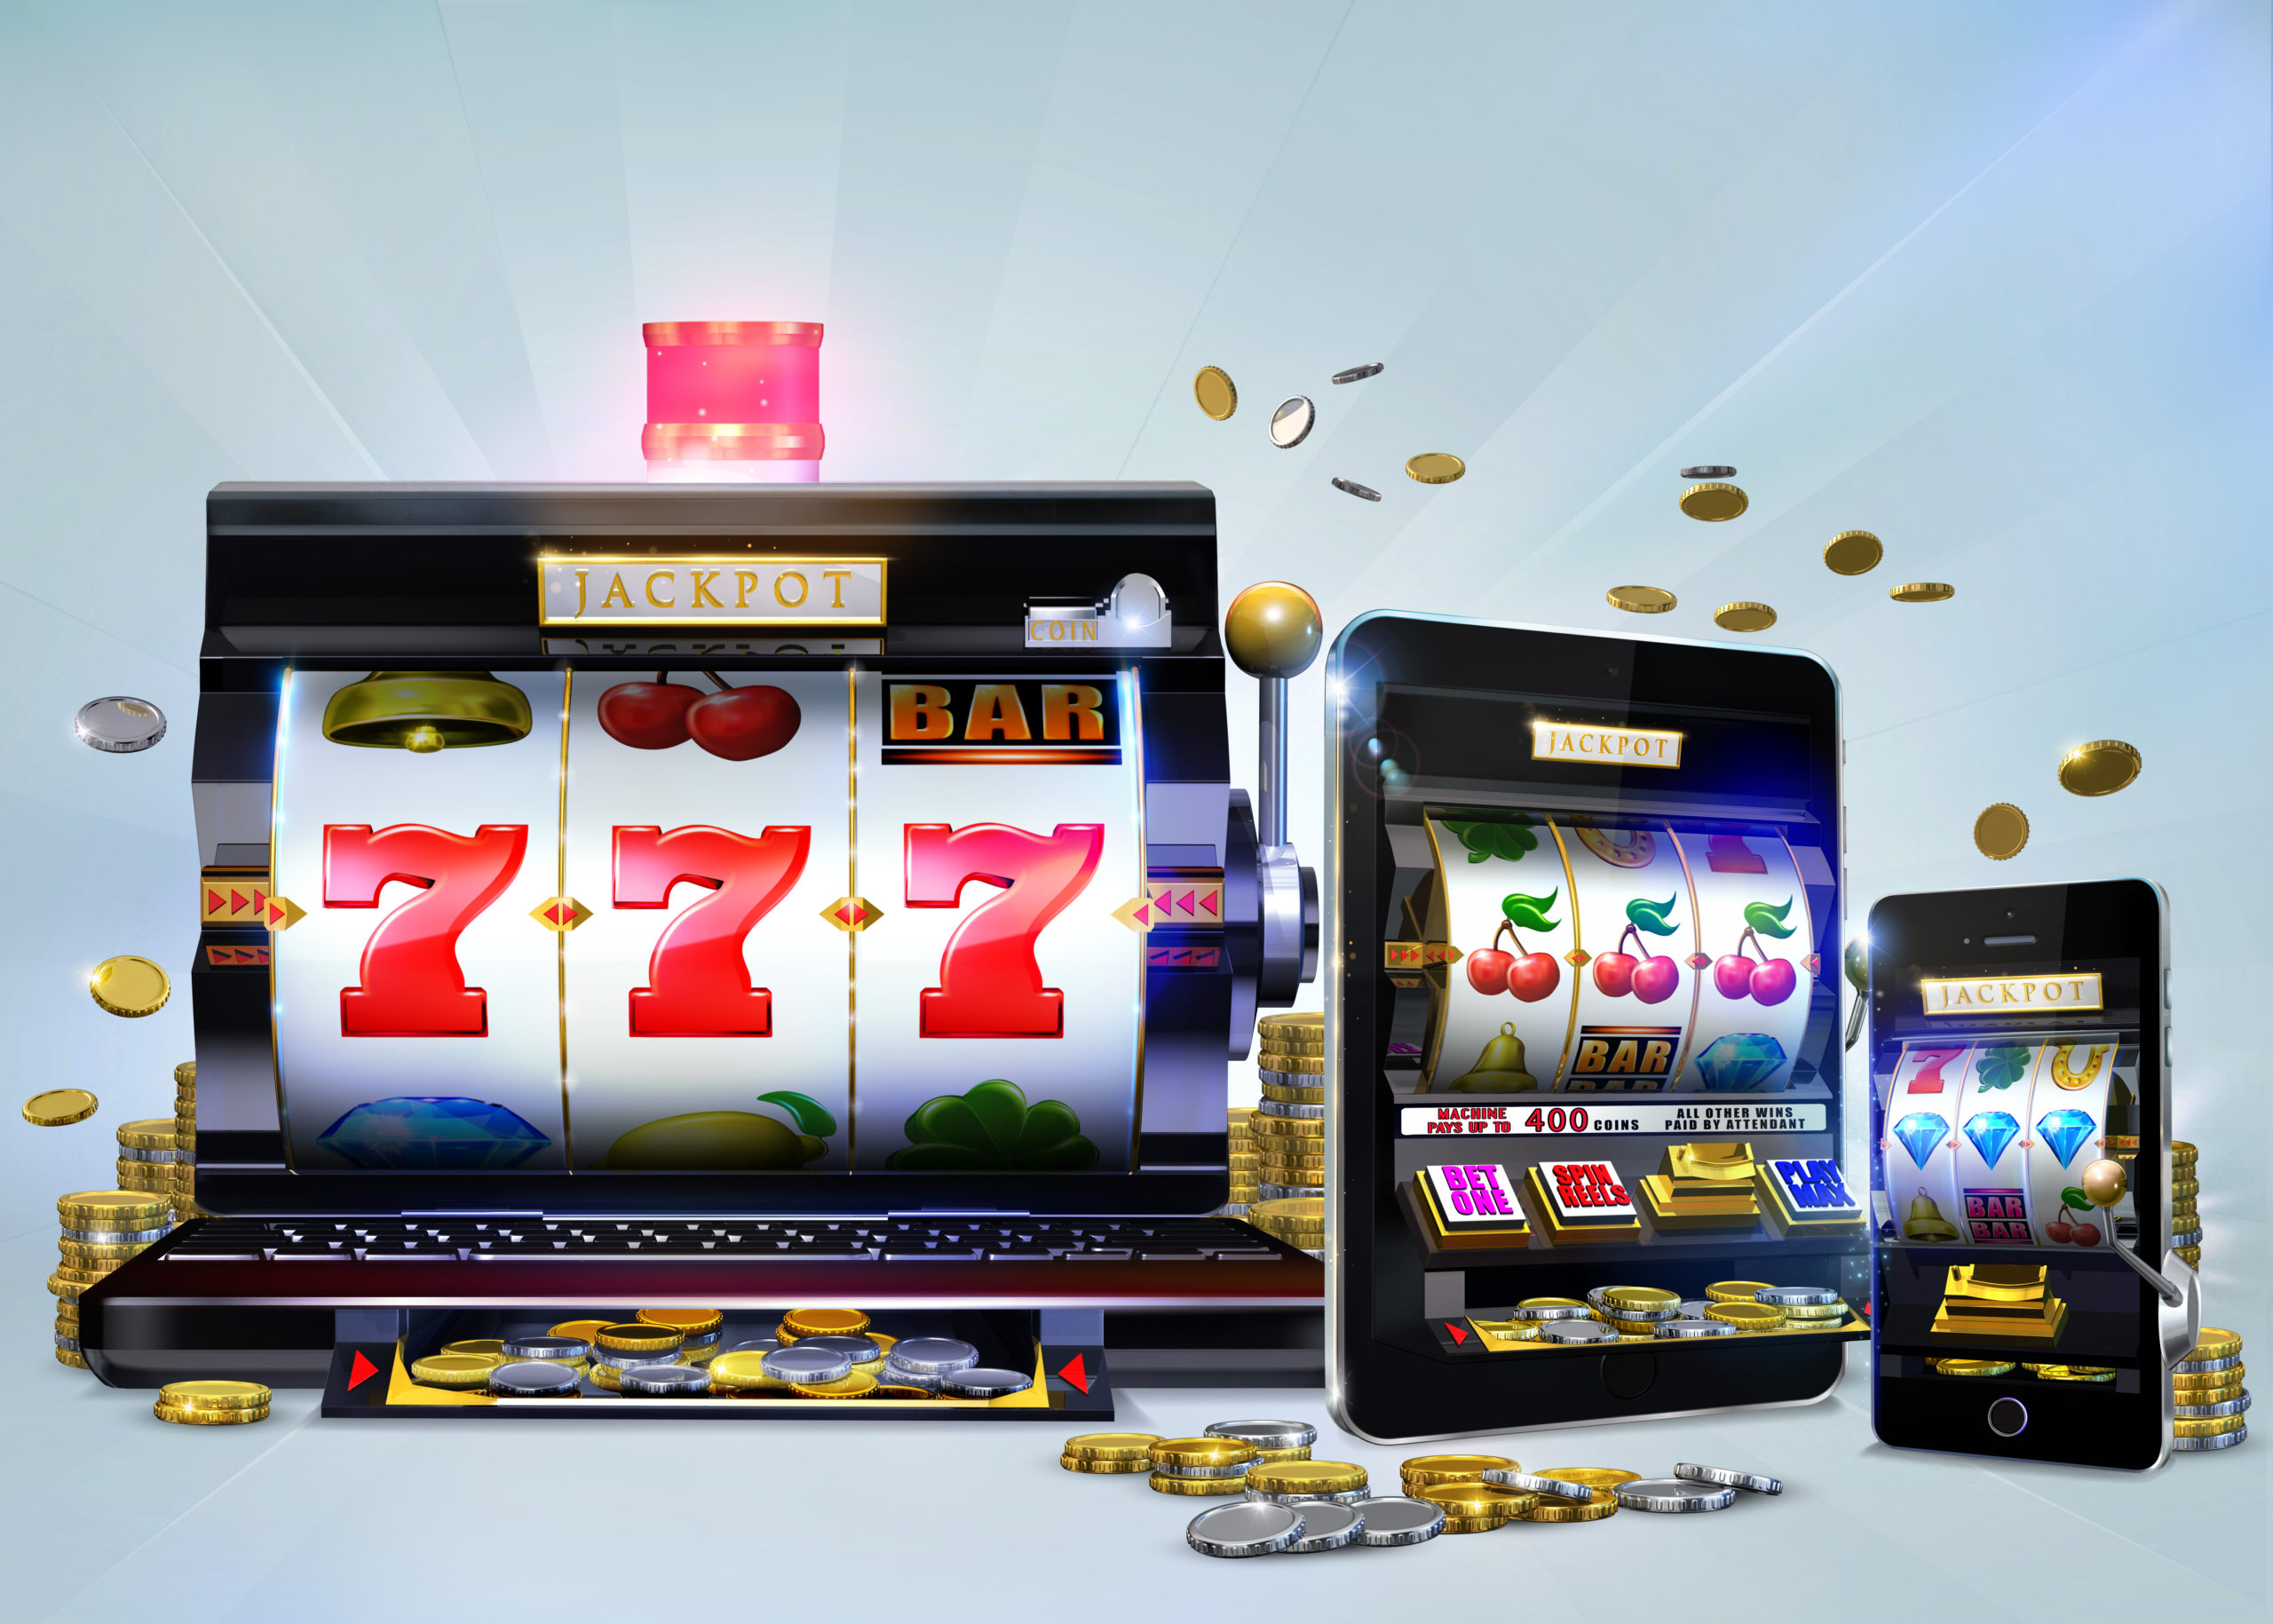 Slots On Mobile Phone Gambling